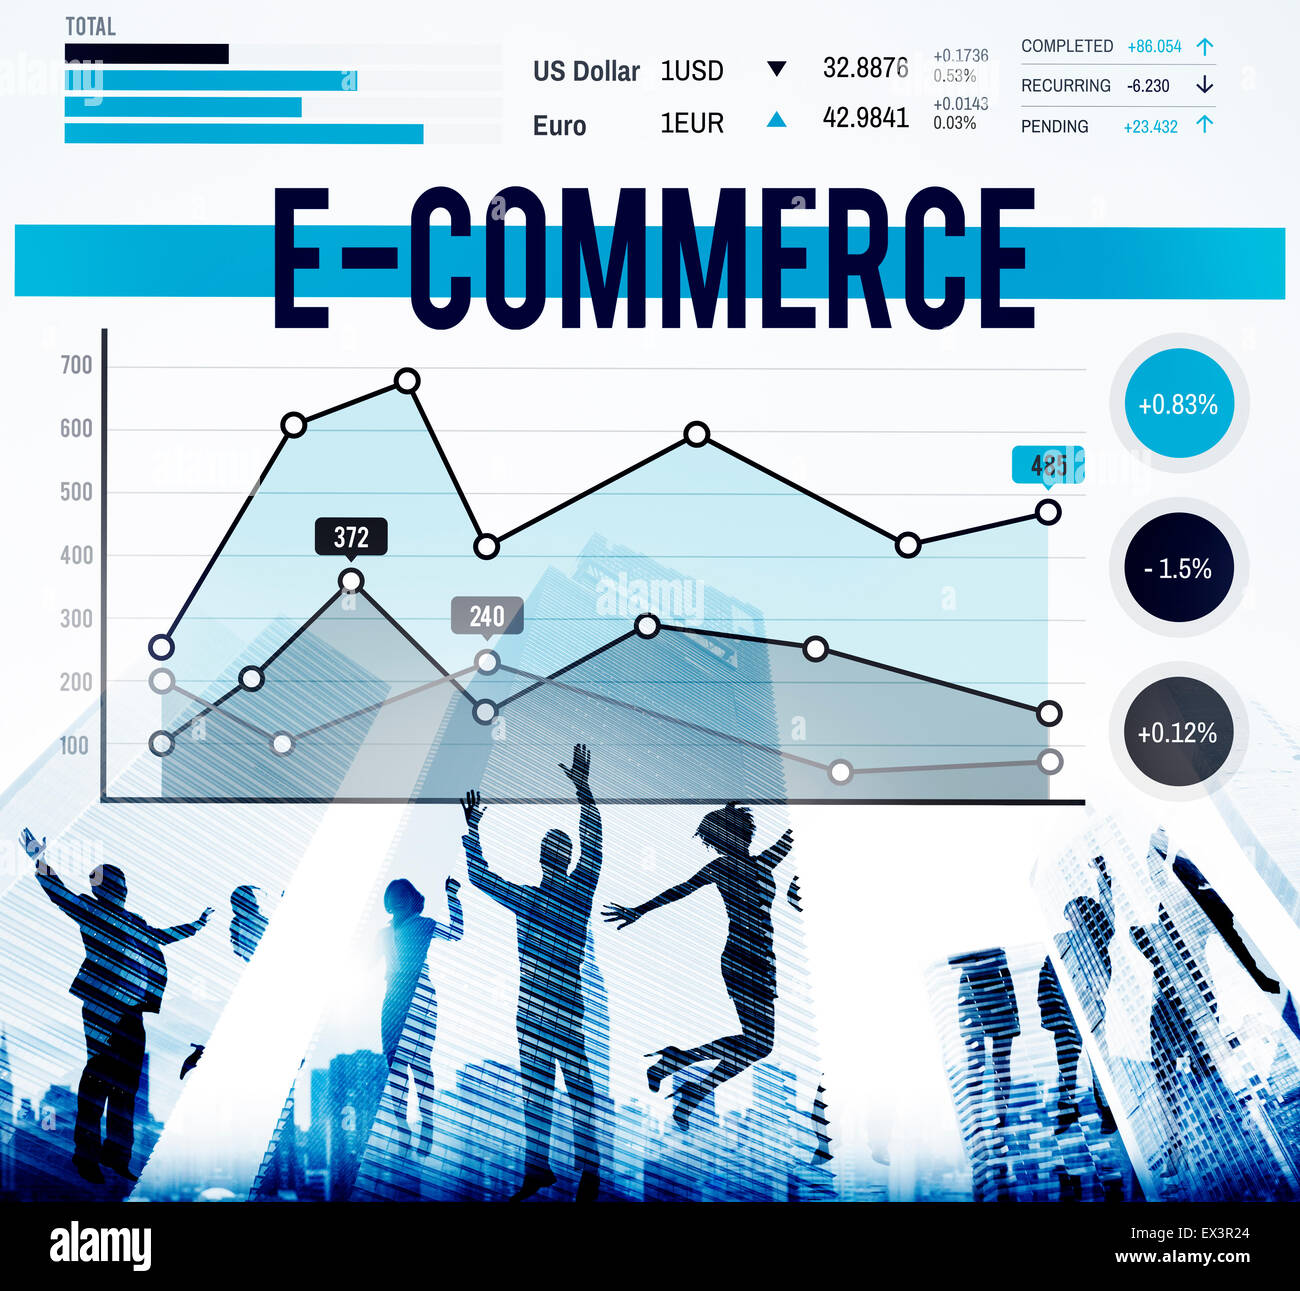 E-commerce Online Technology Marketing Business Concept Stock Photo